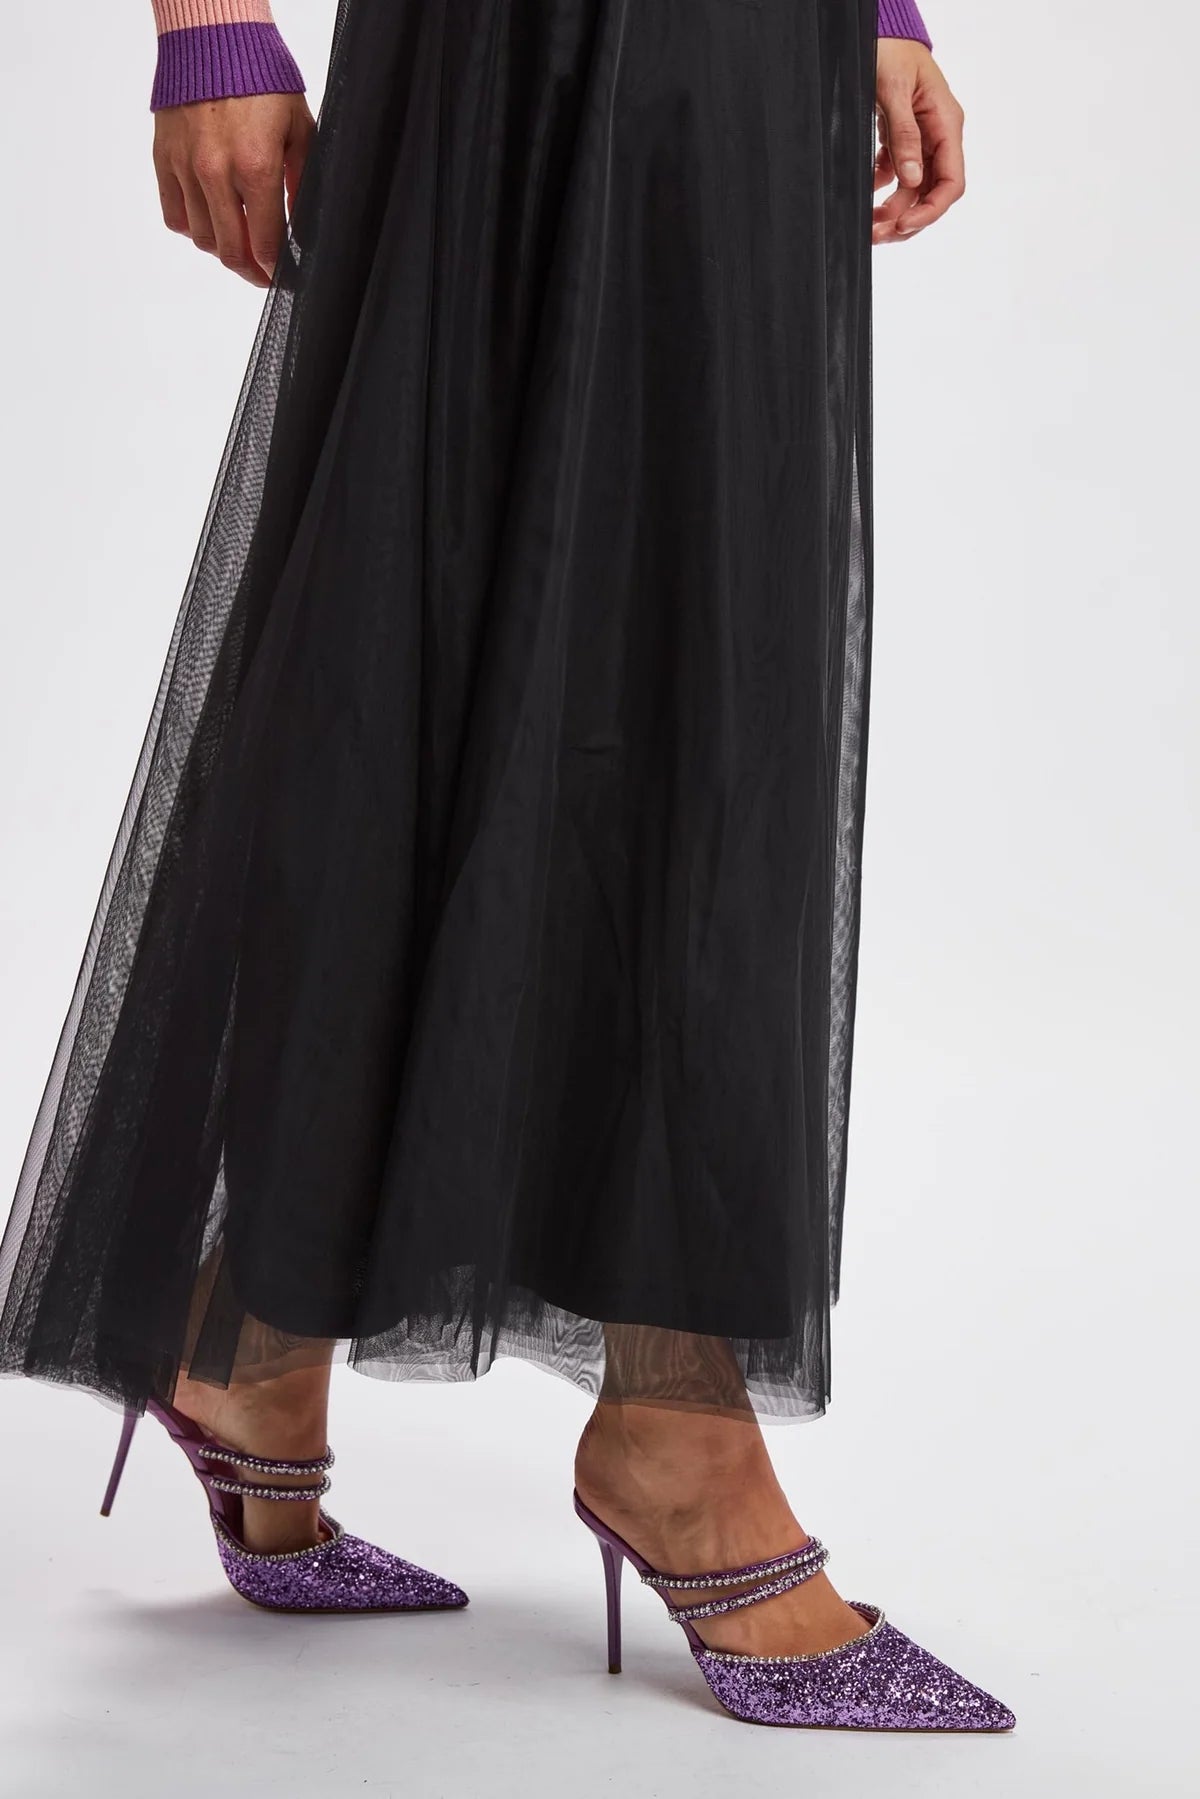 Nümph Nuea Tulle Maxi Skirt in Caviar Black